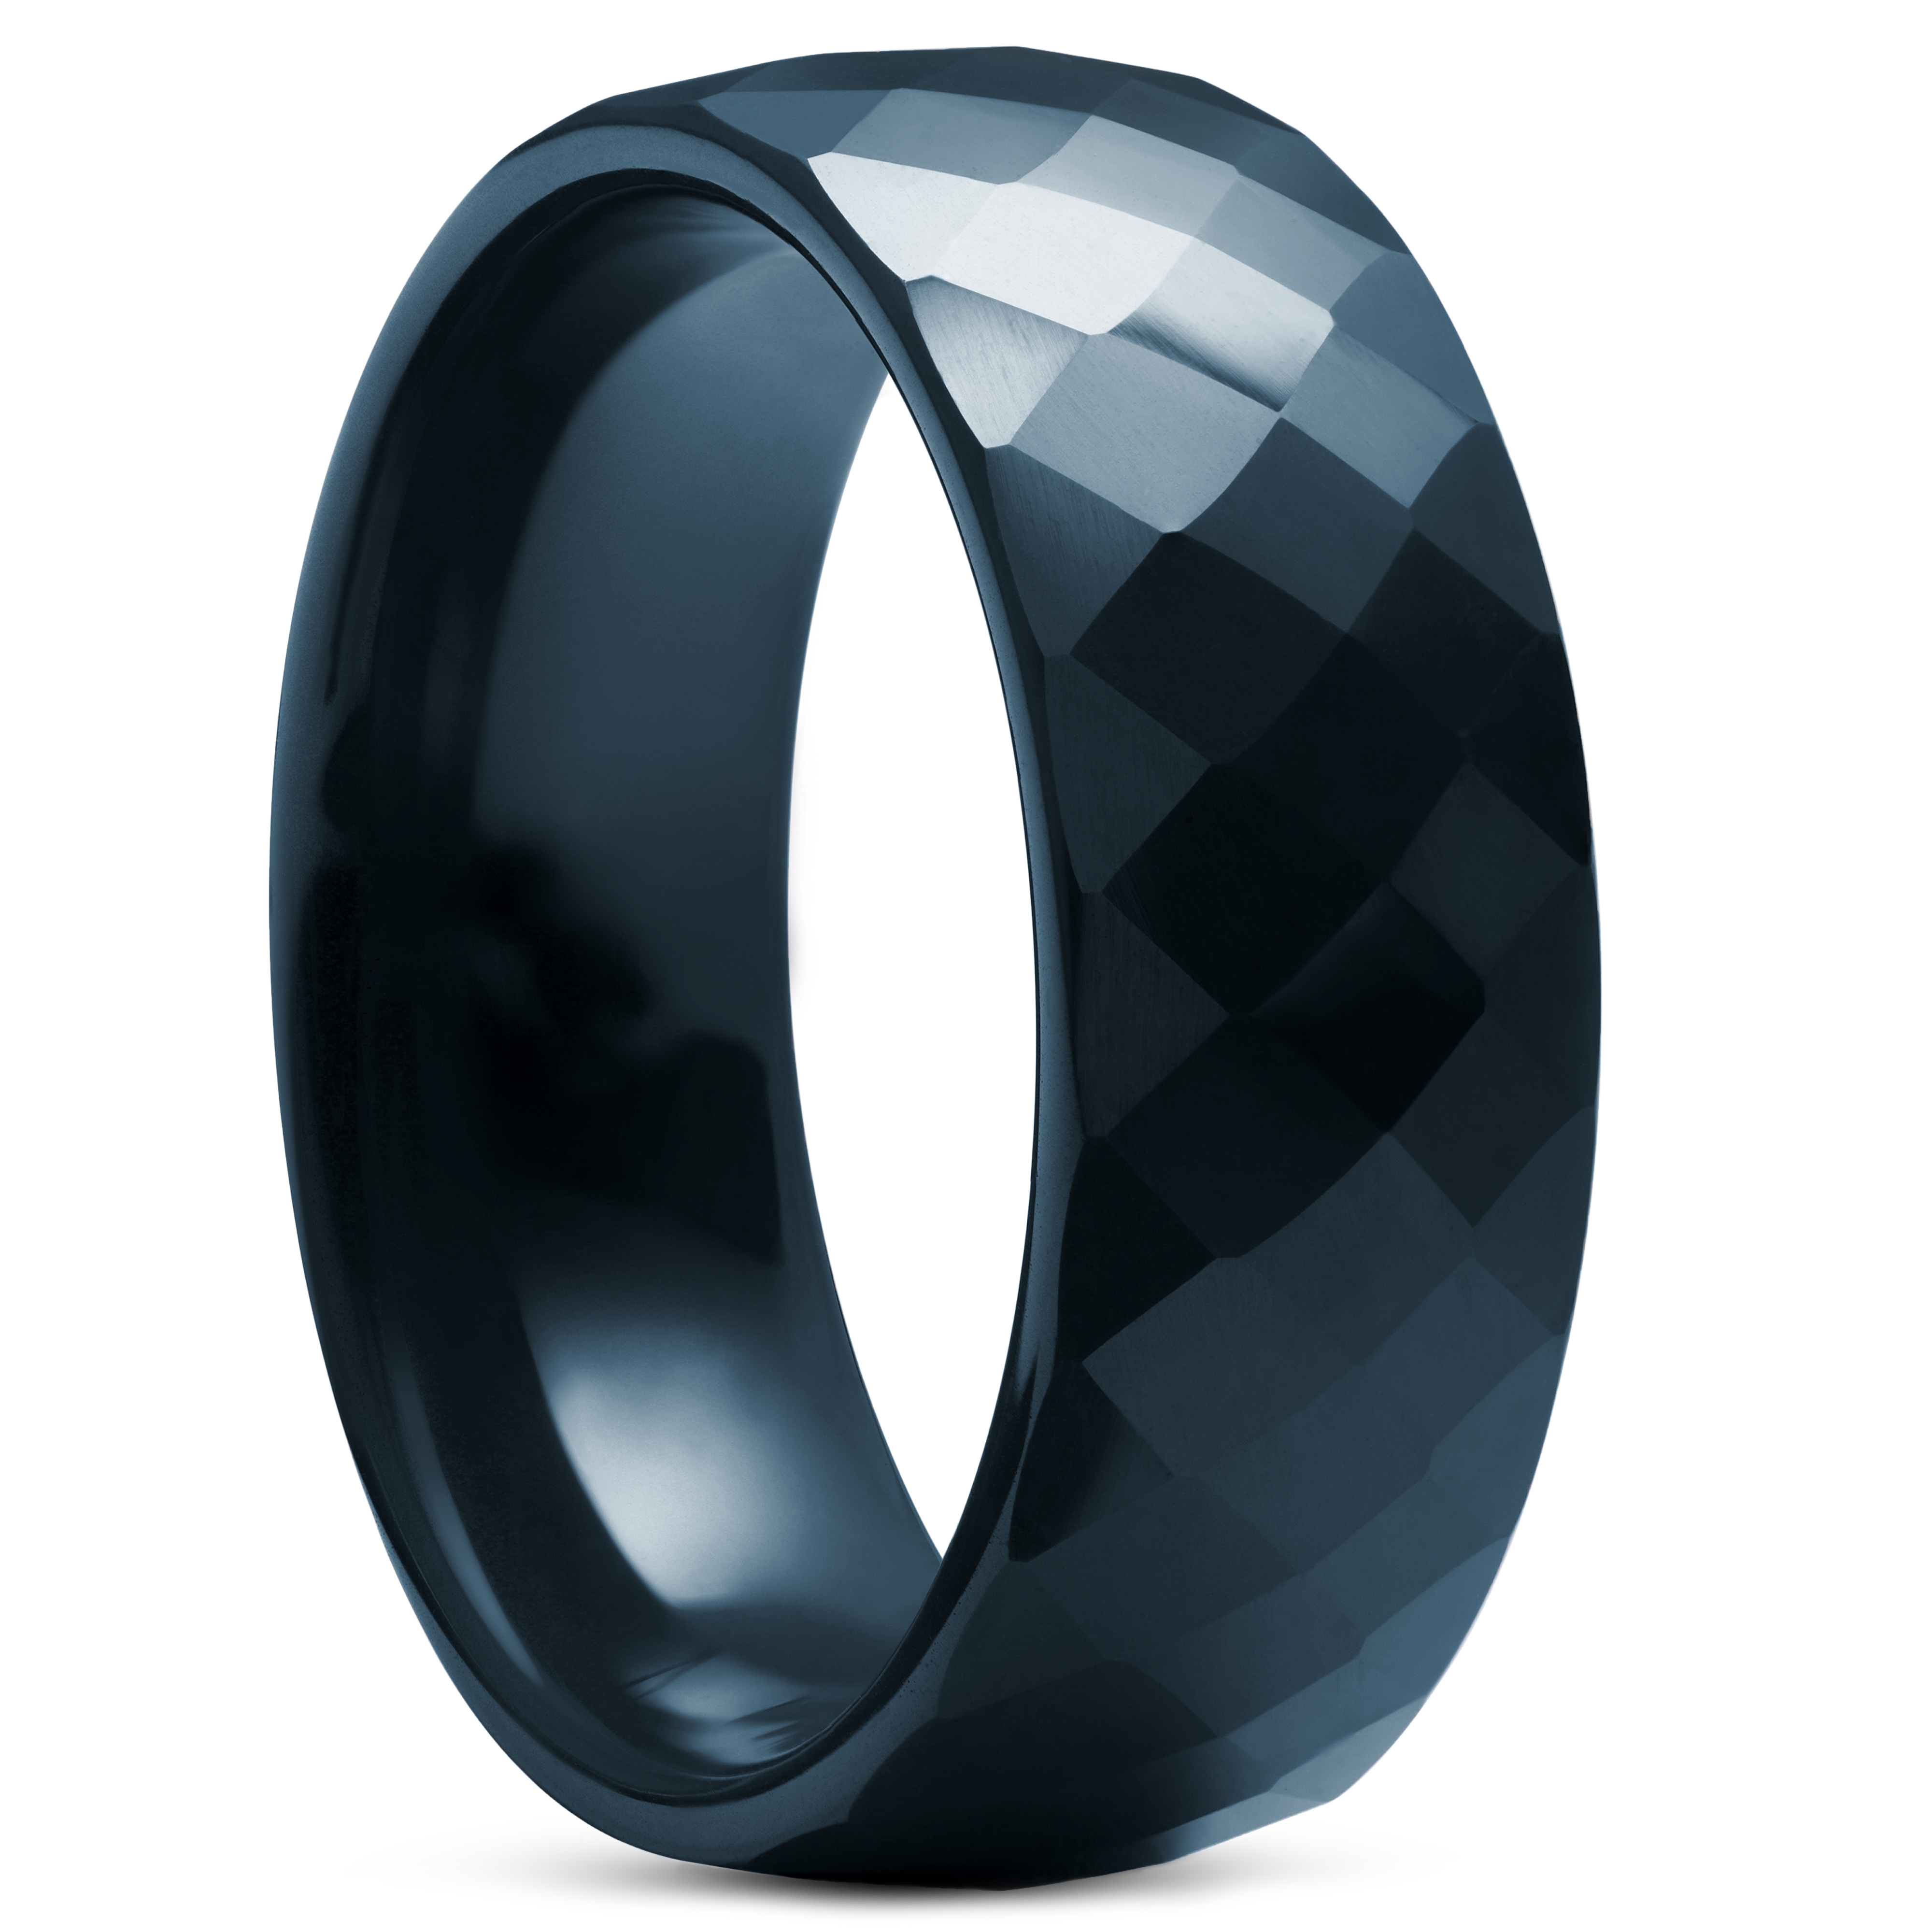 Making a Glowing Meteorite and Black Ceramic Wedding Ring - YouTube